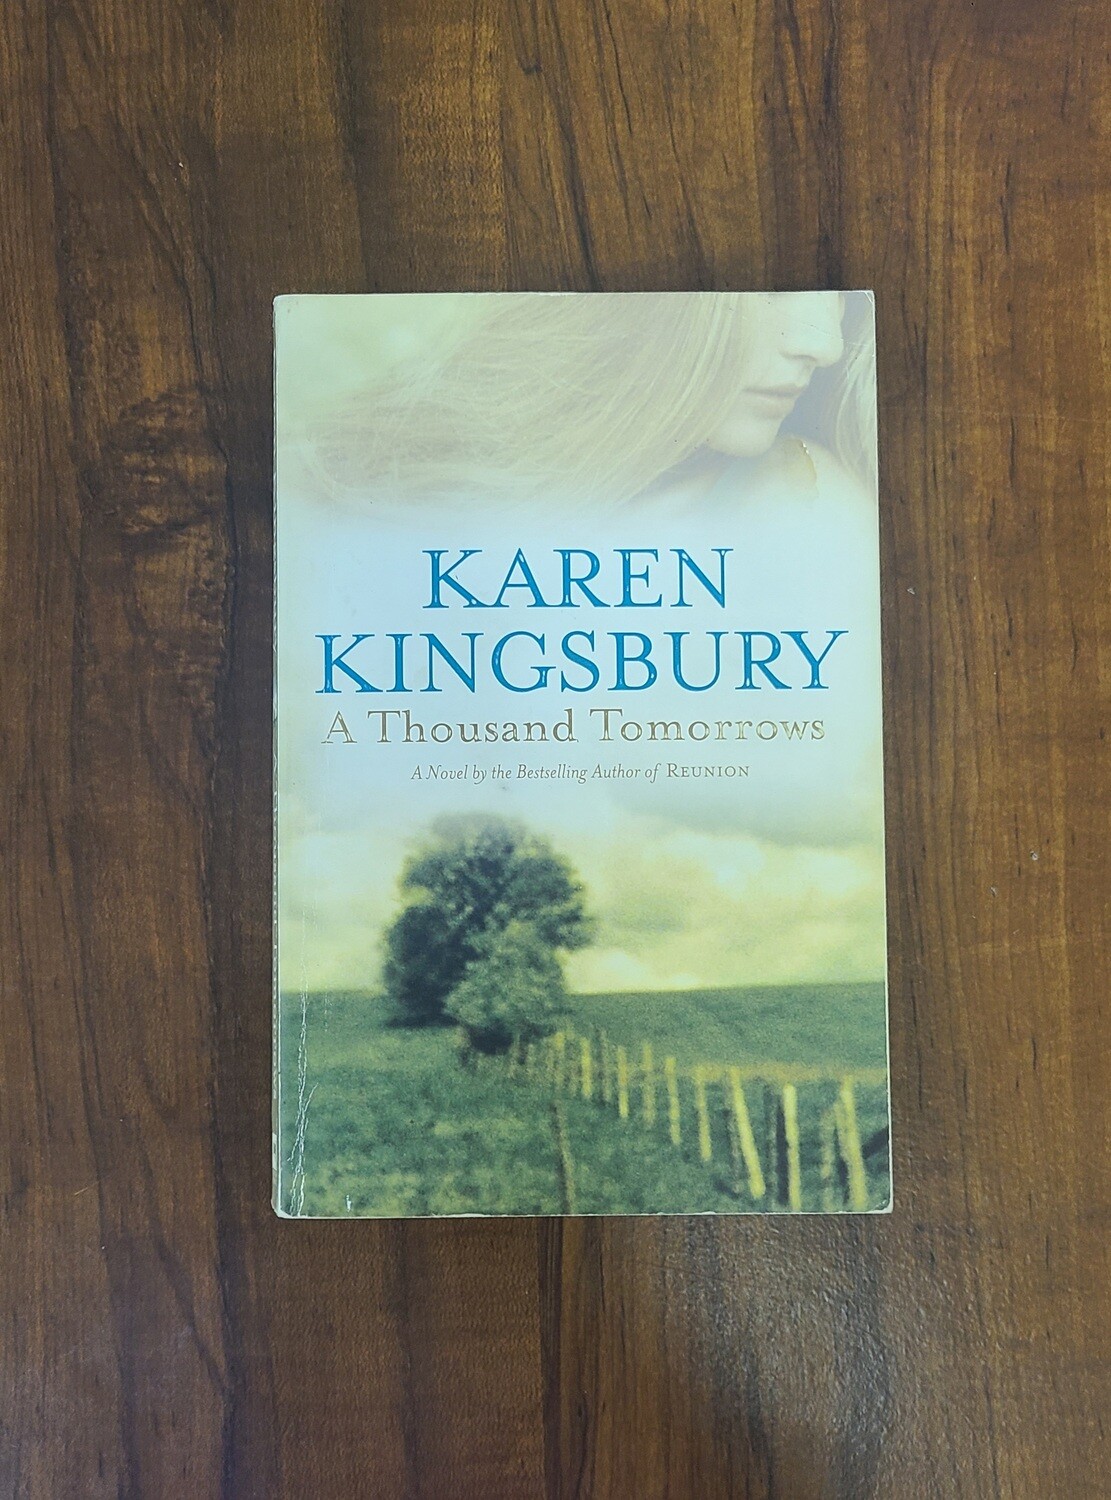 A Thousand Tomorrows by Karen Kingsbury